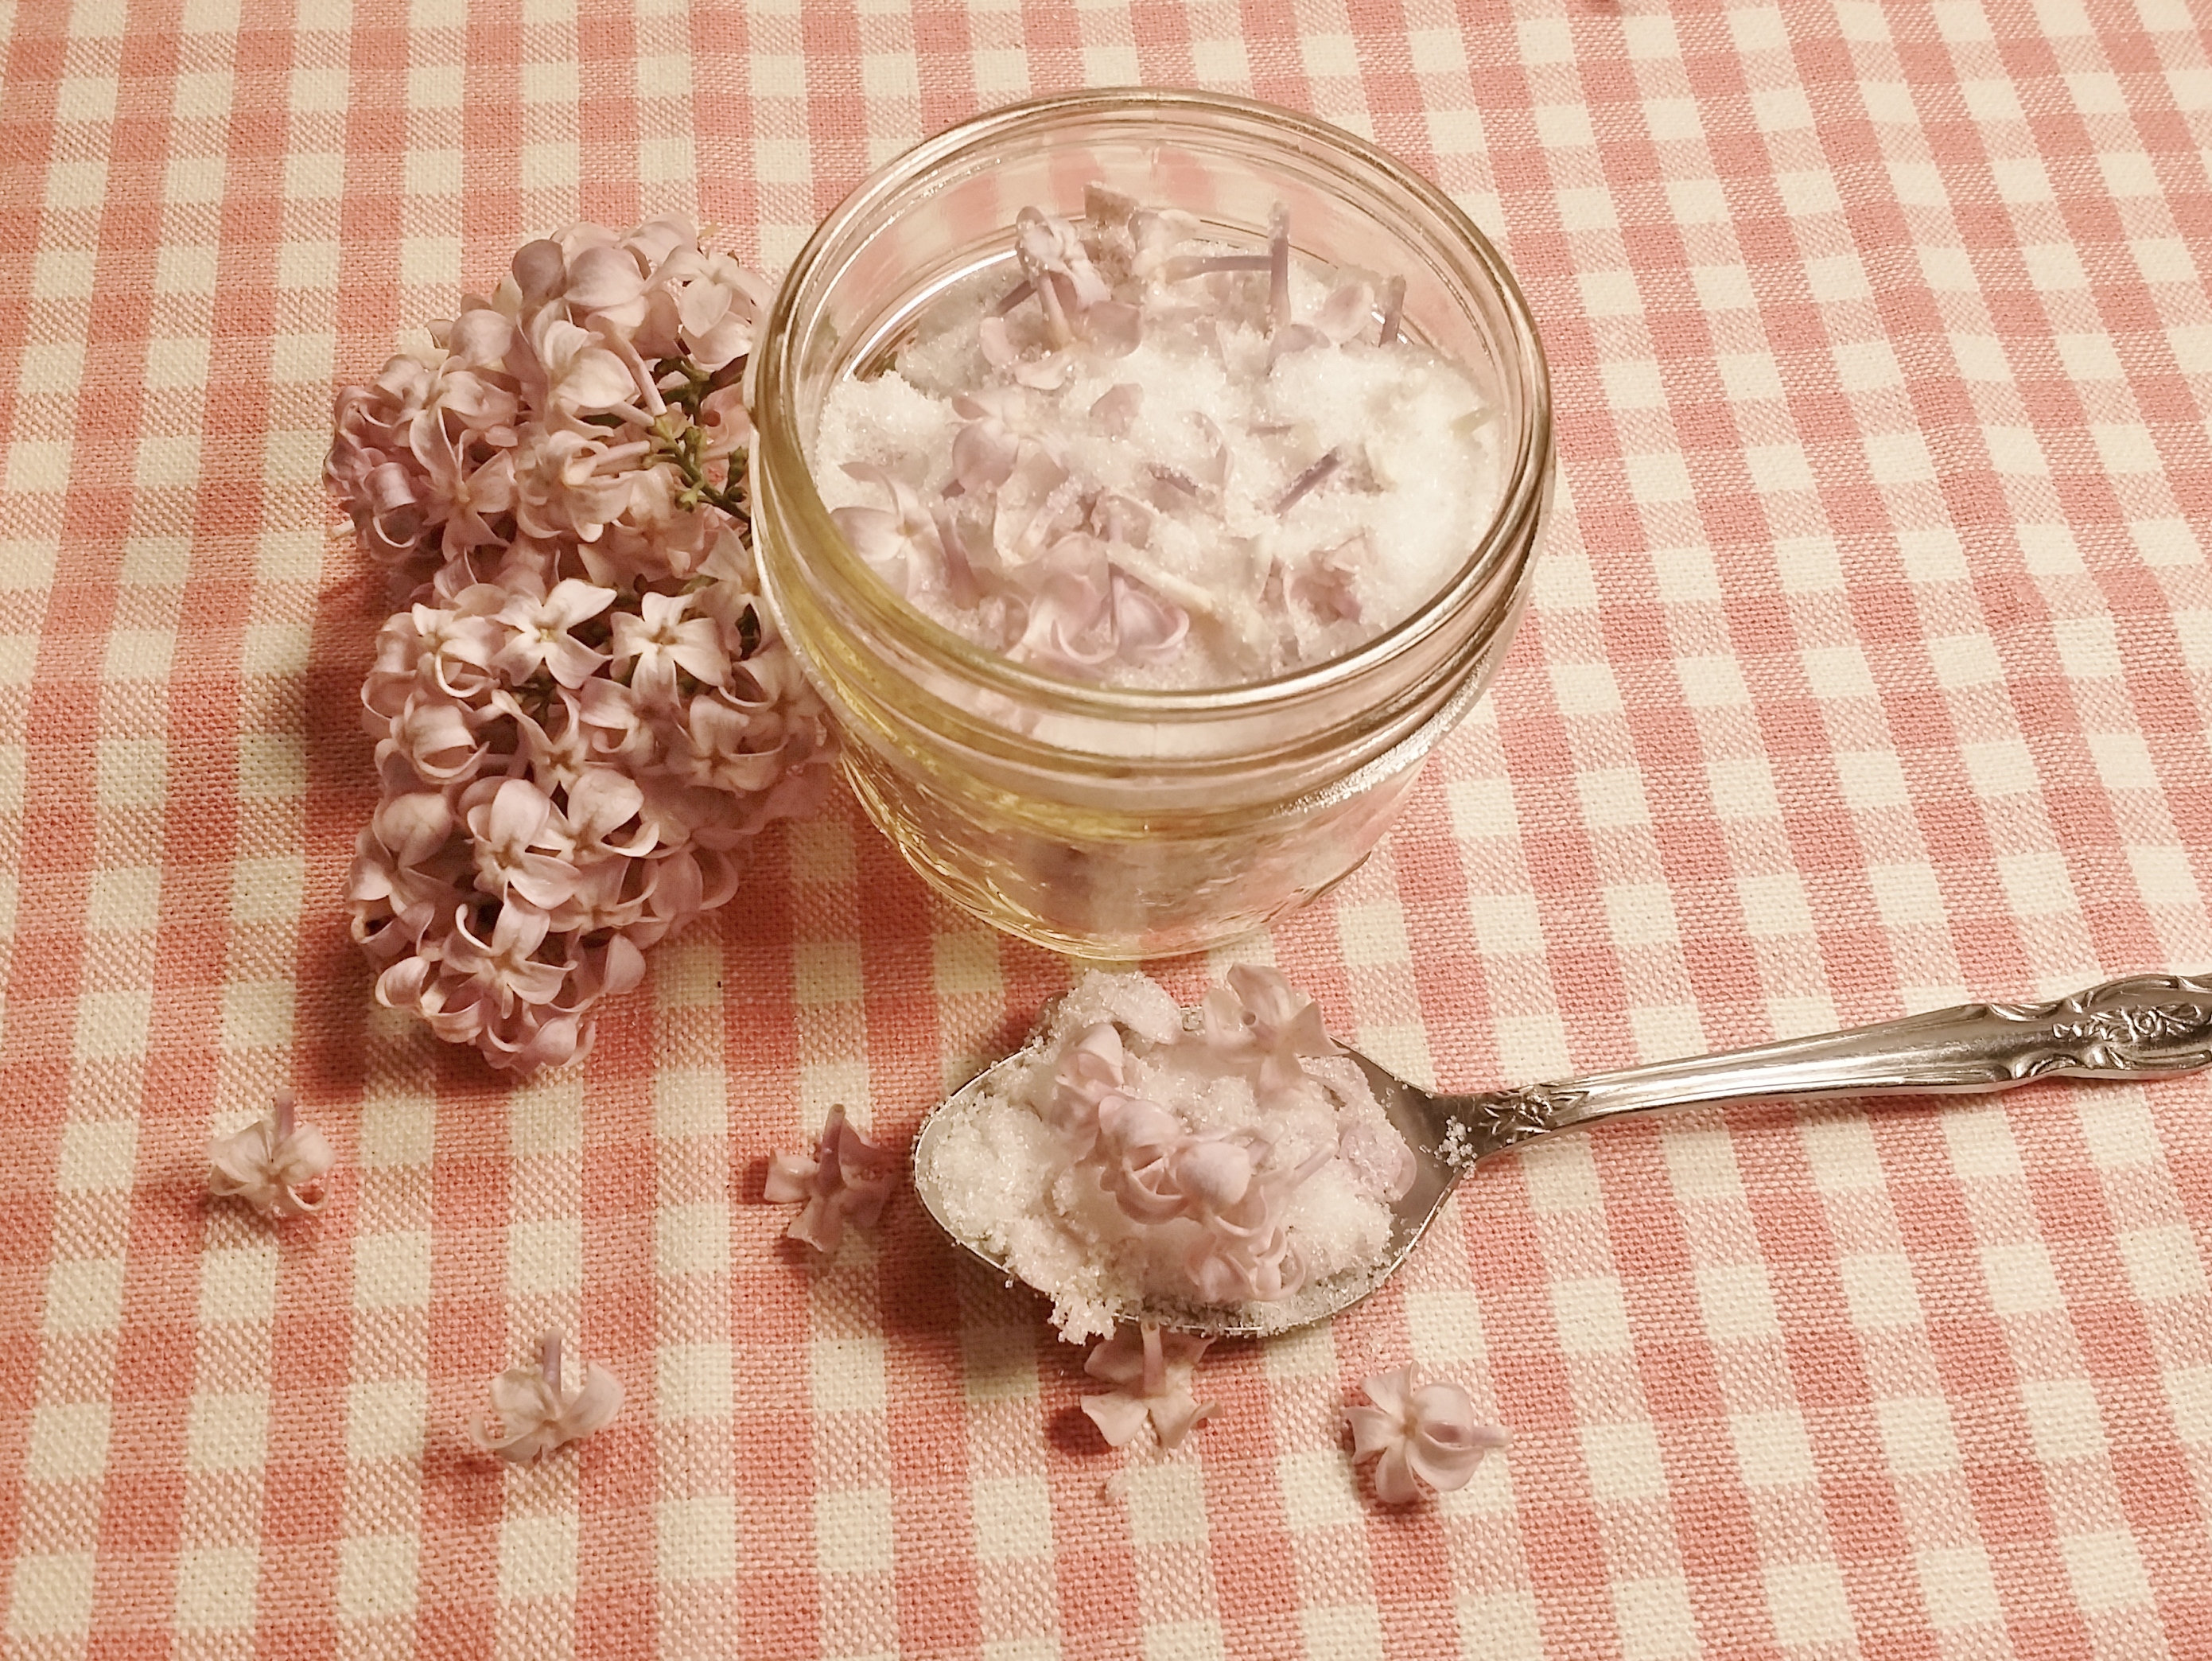 Giving Lilacs a little Sugar recipe!